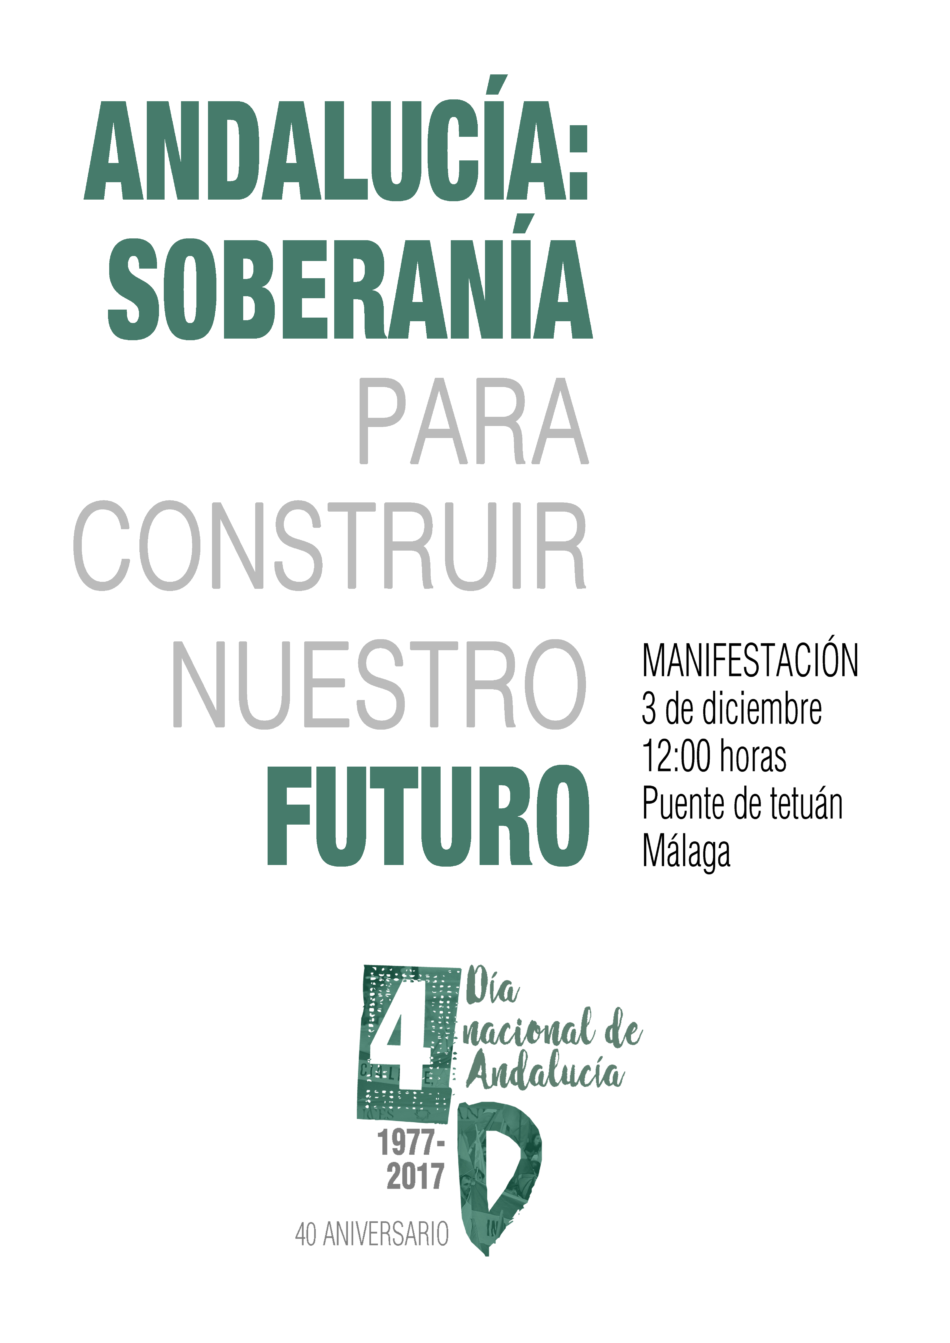 La ‘Plataforma 4D’ llama a salir el próximo 3 de diciembre “por una Andalucía soberana”